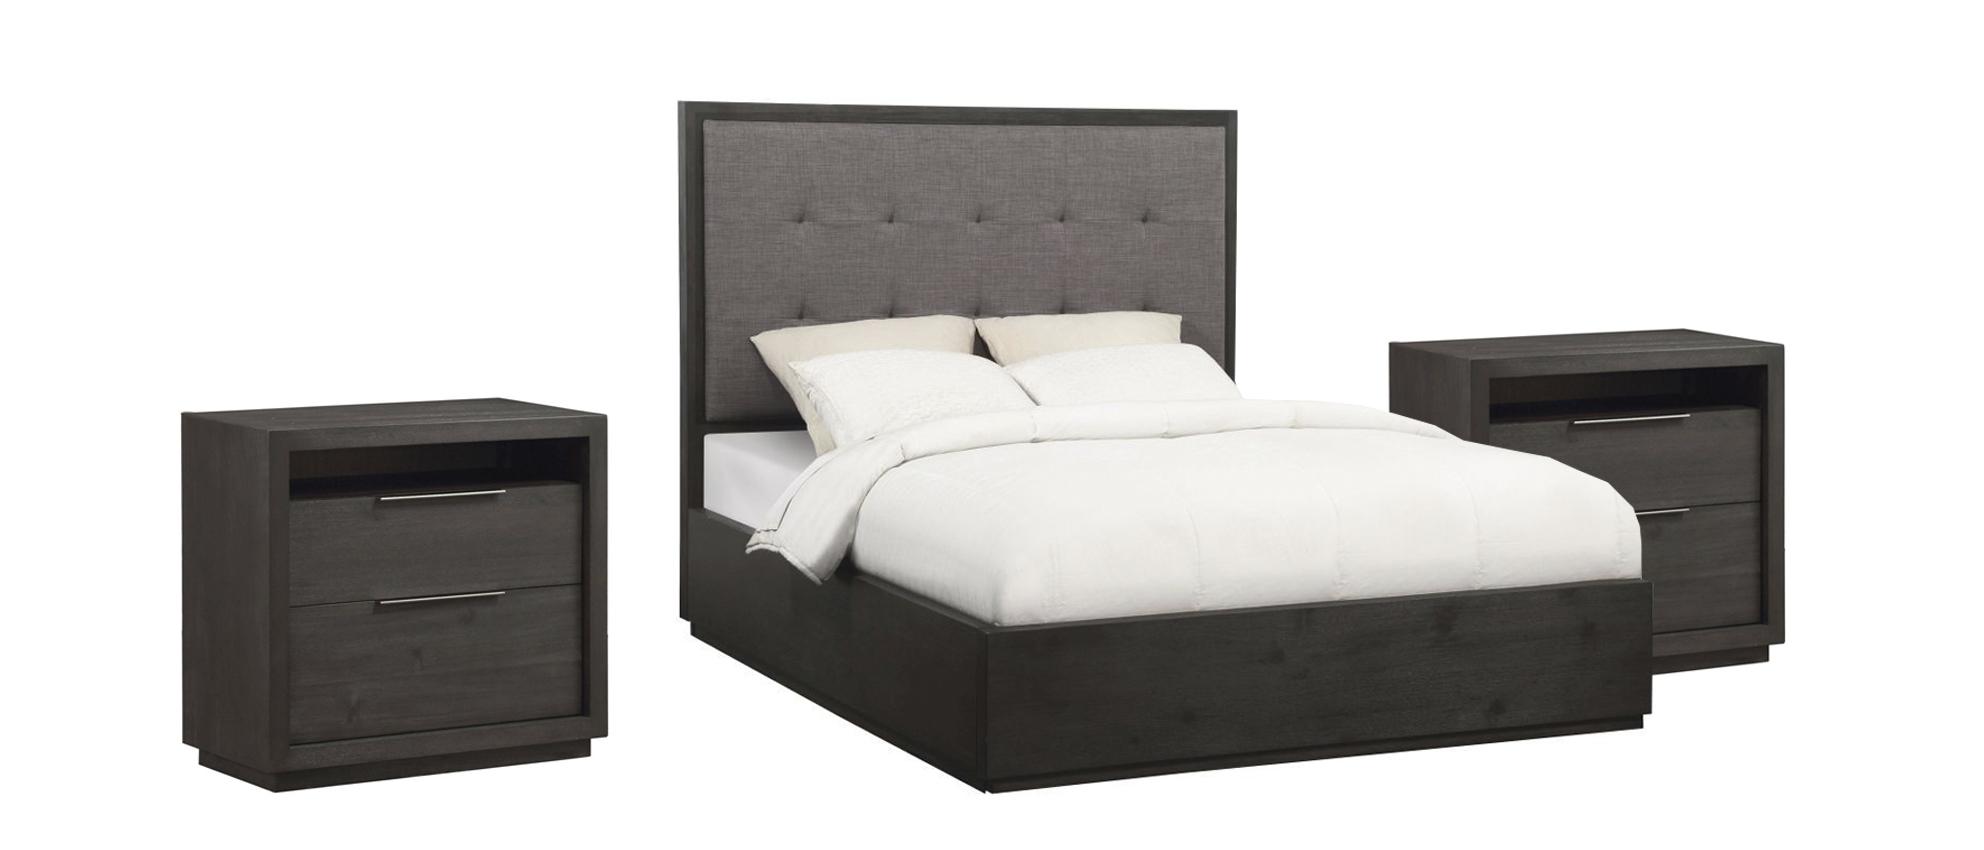 Contemporary Platform Bedroom Set OXFORD AZU5F7D-2N-3PC in Dark Gray Fabric